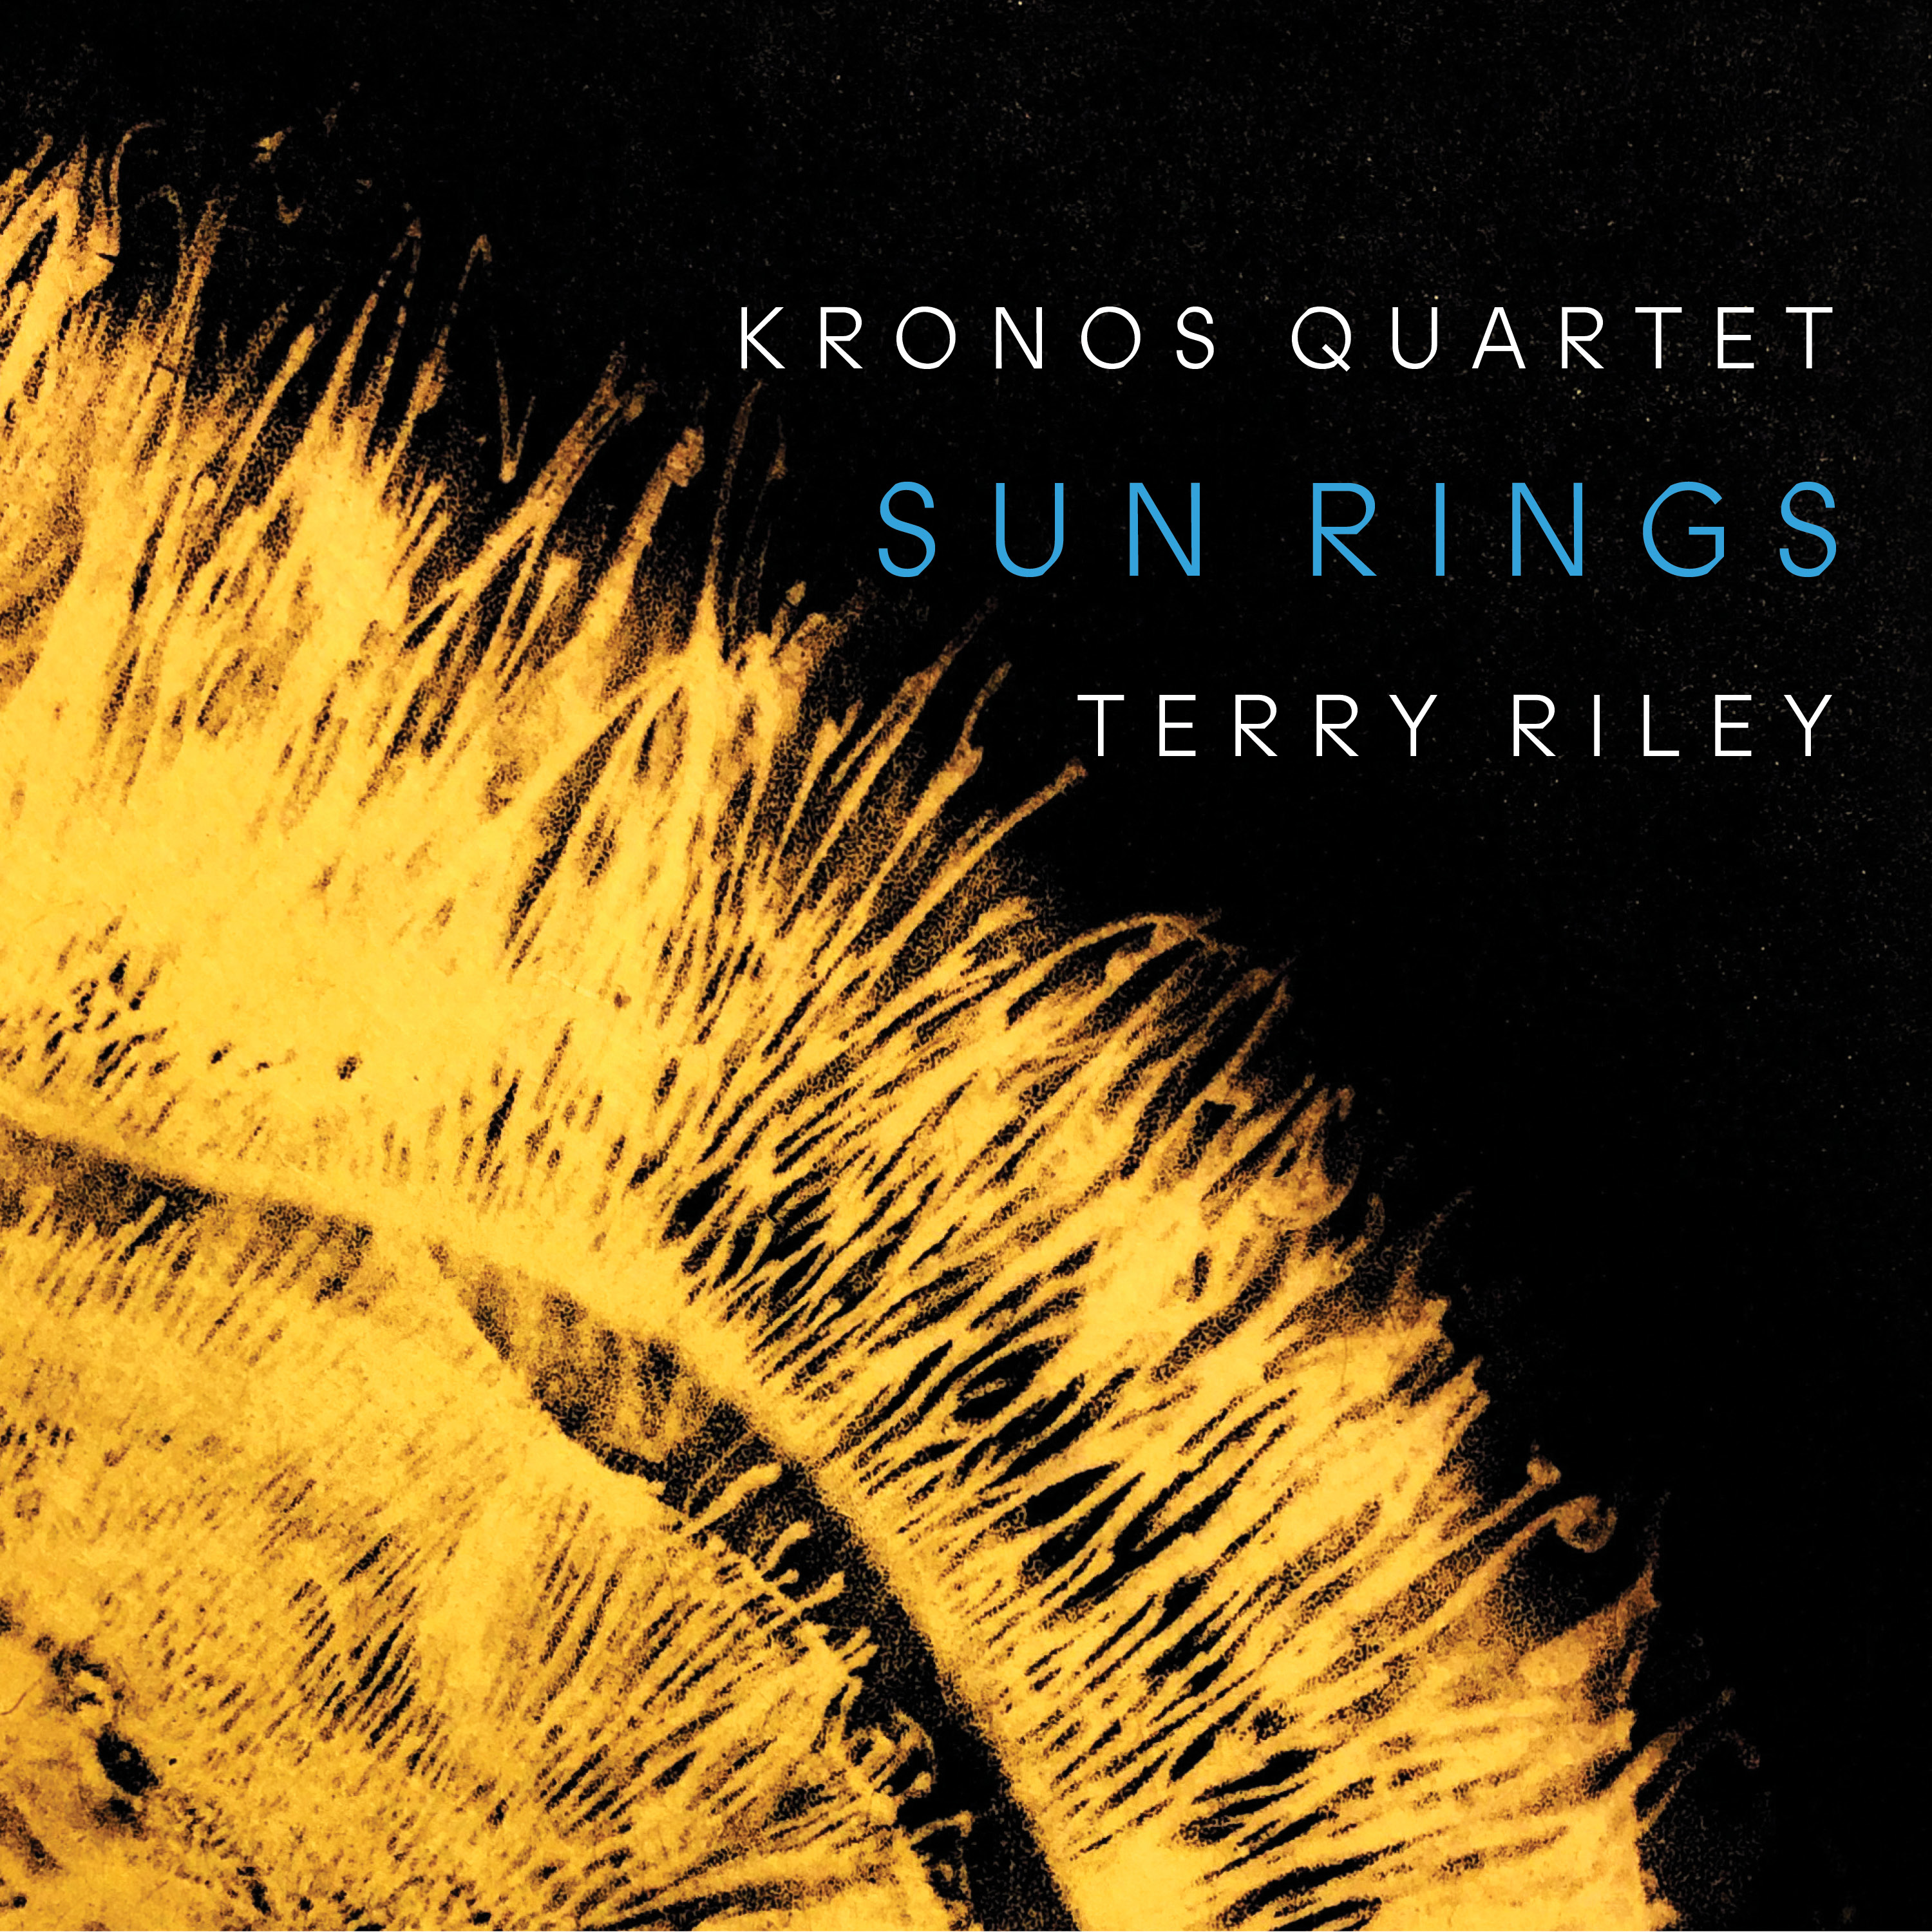 Kronos Quartet - Sun Rings by Terry Riley